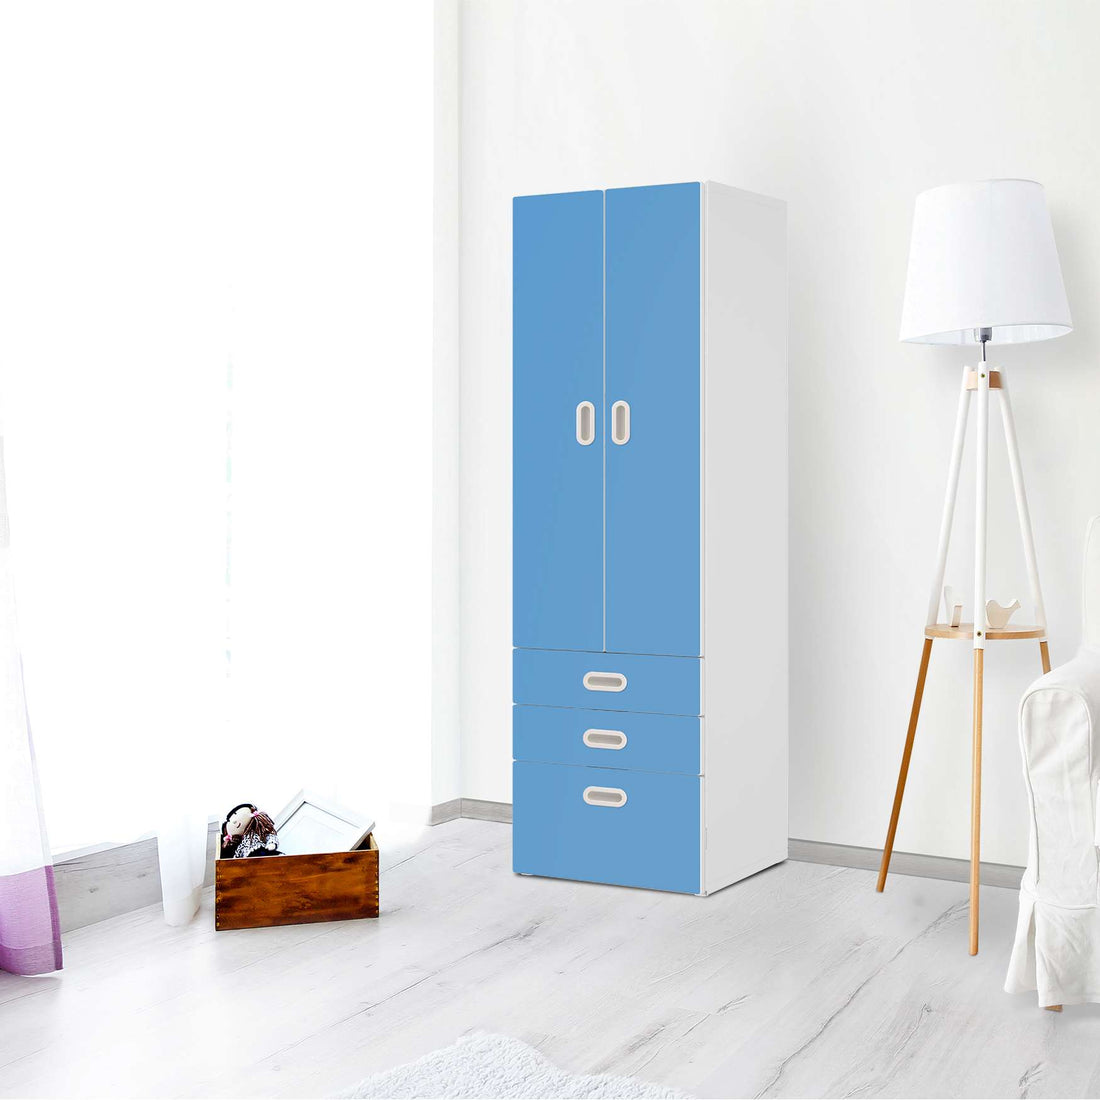 Klebefolie Blau Light - IKEA Stuva / Fritids kombiniert - 3 Schubladen und 2 große Türen - Kinderzimmer